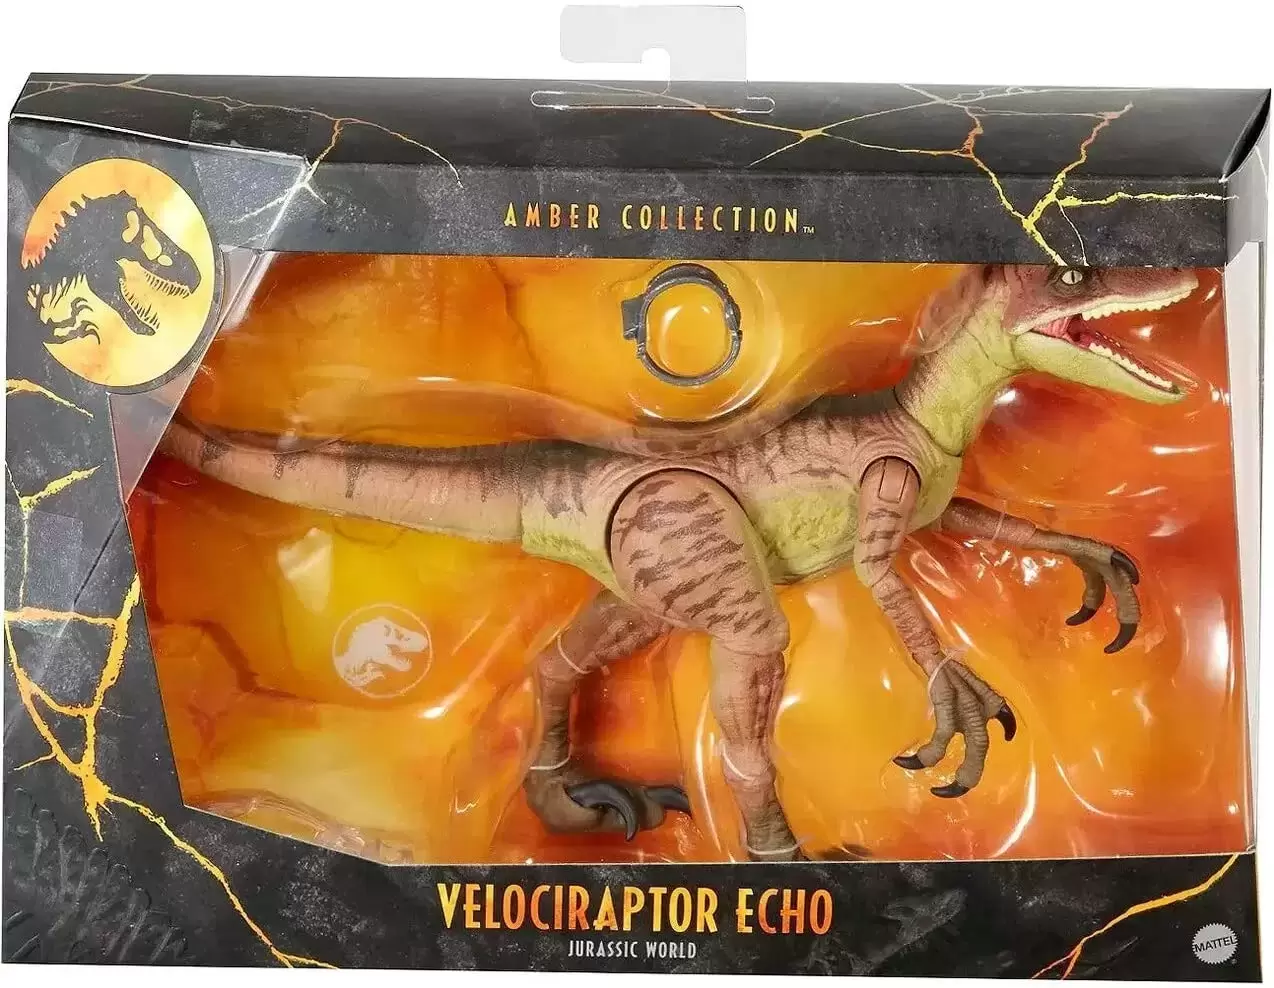 Velociraptor Echo - Jurassic World Amber Collection action figure